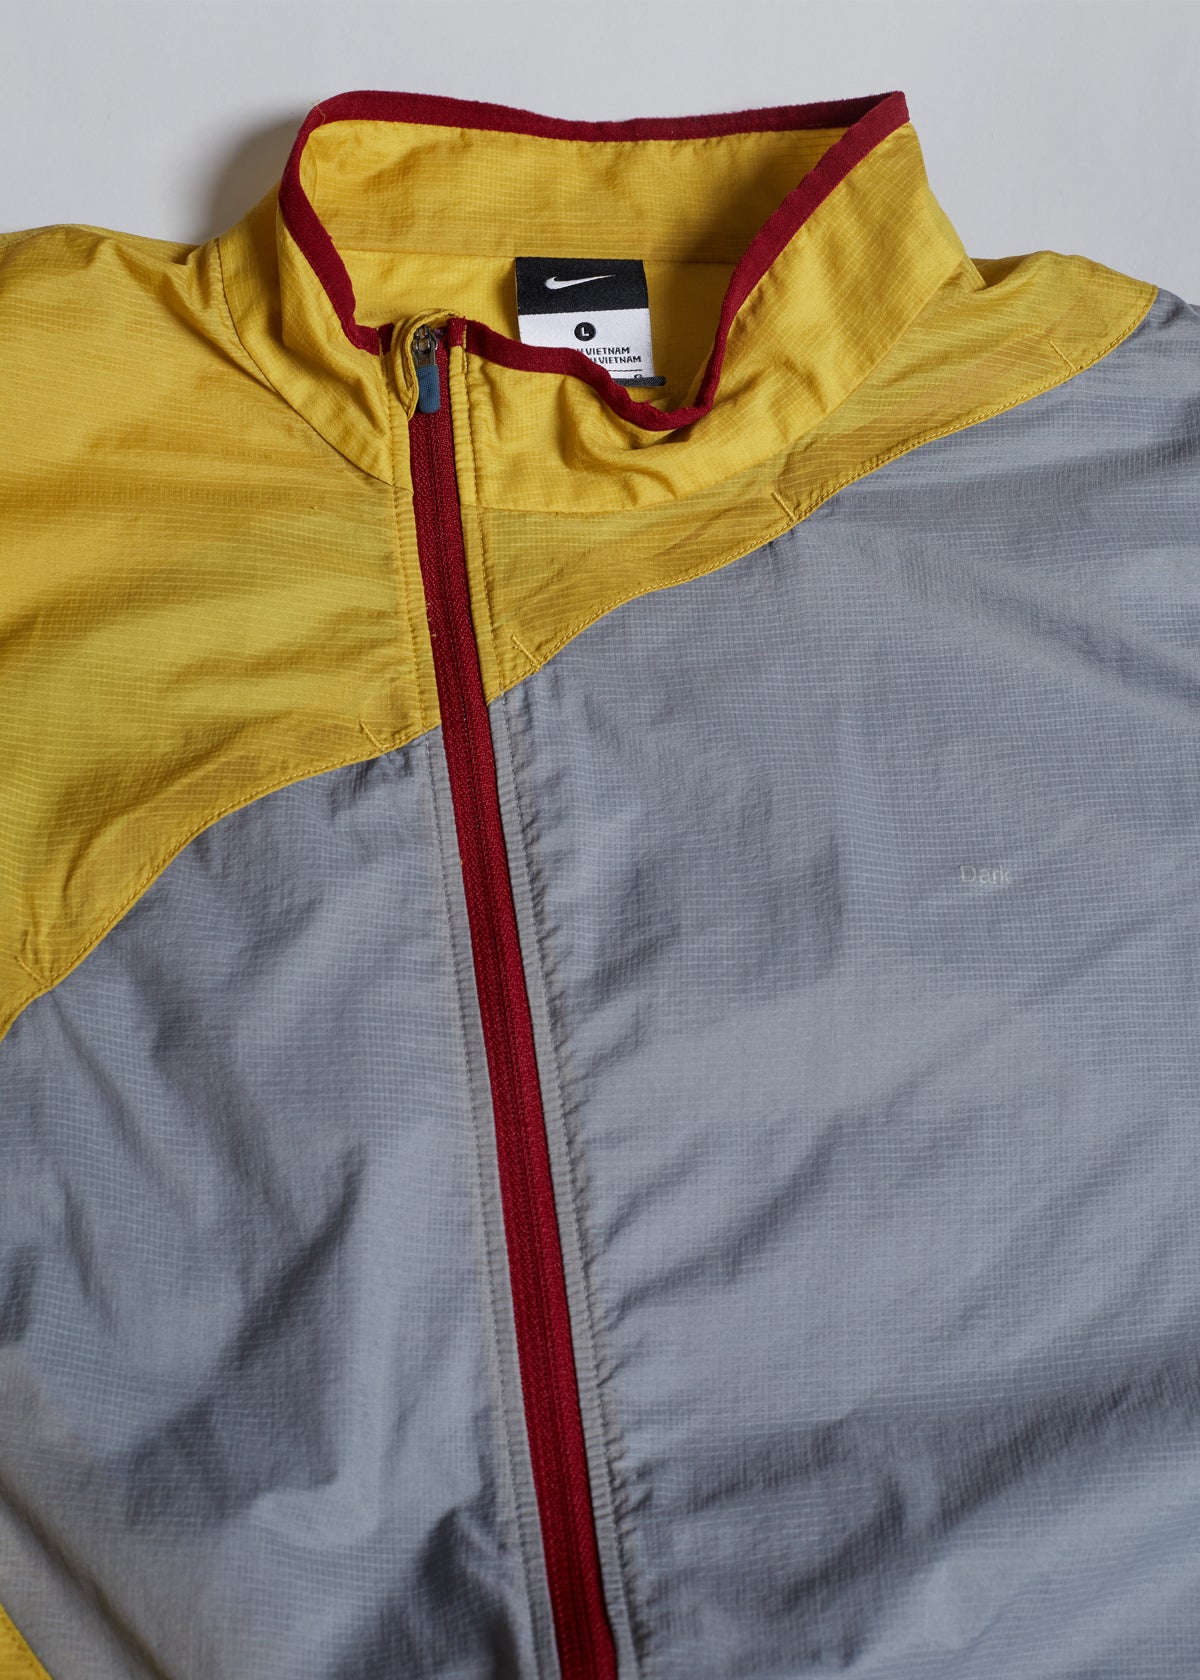 Nike/Undercover Gyakusou Curve Split Jacket SS2014 - Large – The